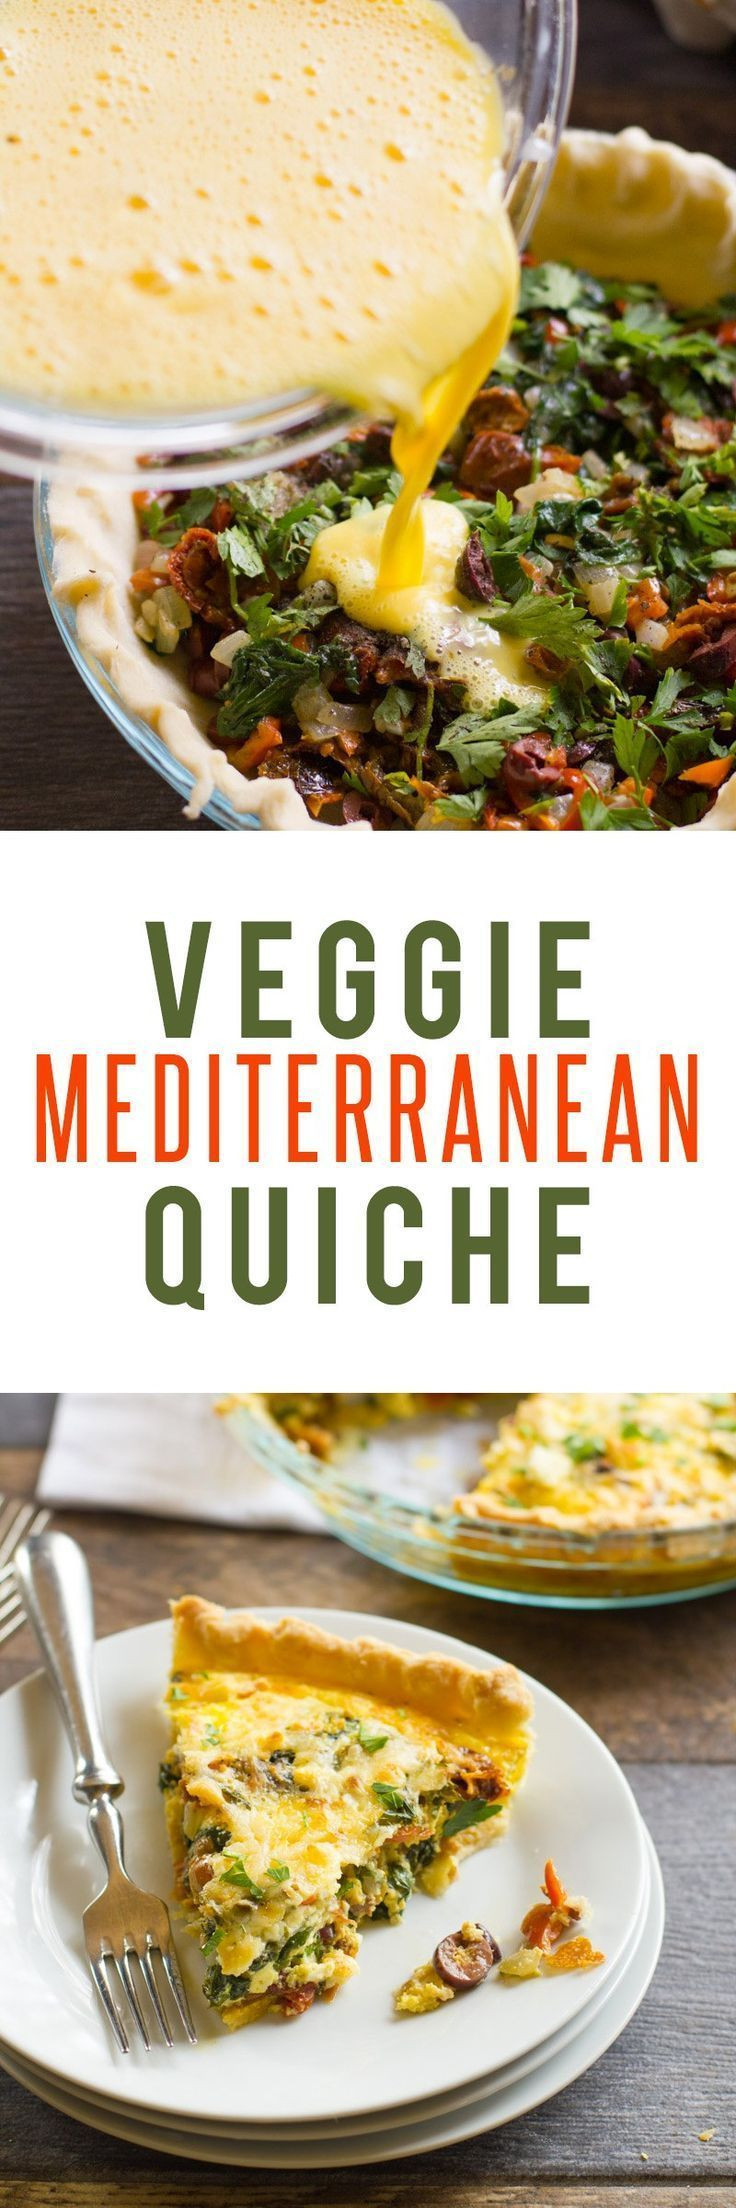 Quiche Recipes Vegetarian
 Best 25 Ve arian quiche ideas on Pinterest